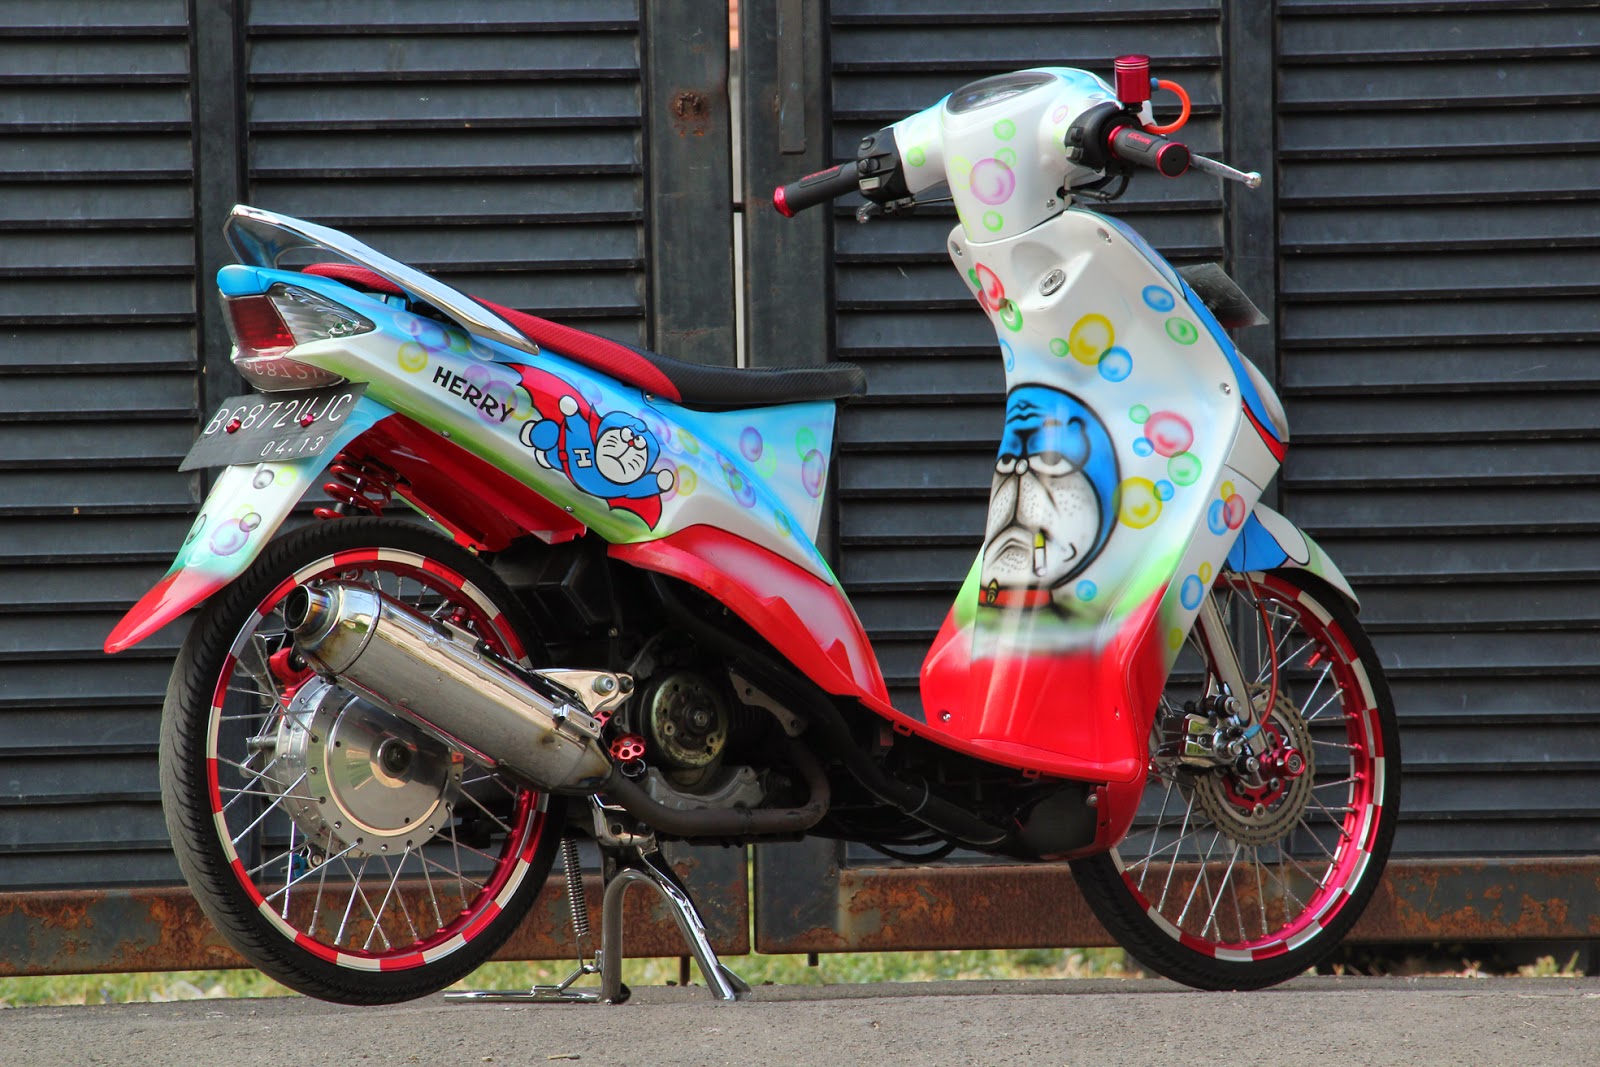 1 Sosok Doraemon Di Yamaha Mio 2008 Wallpaper Car And Motorcycle